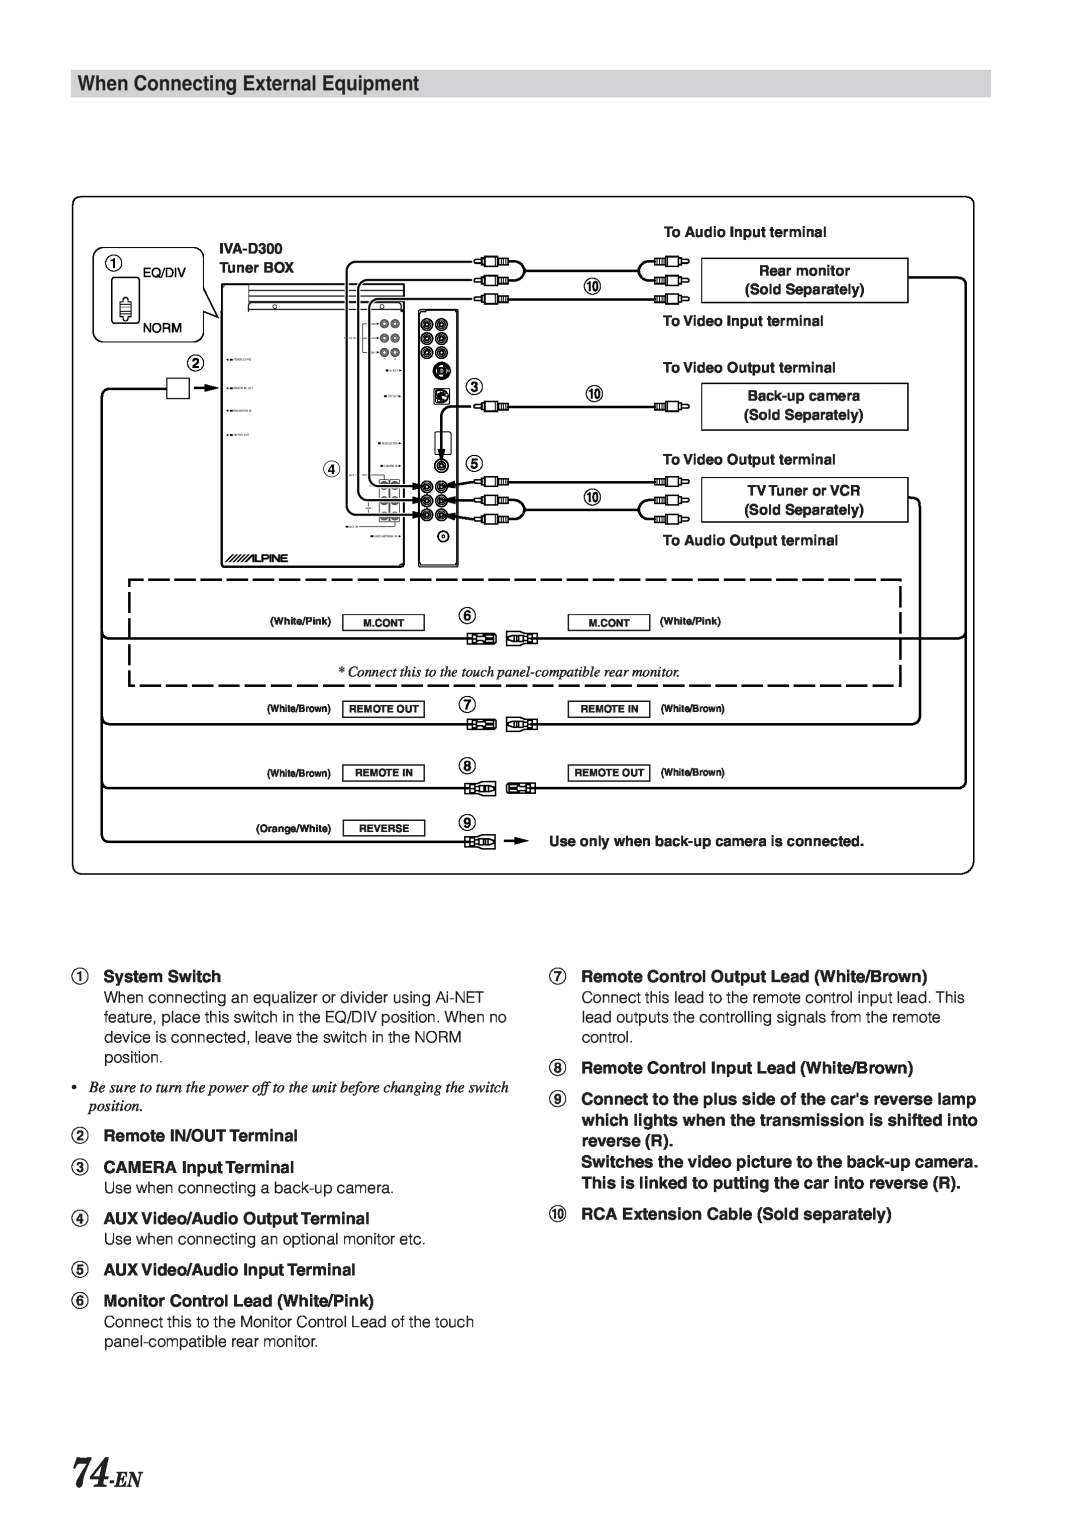 Alpine IVA-D300 When Connecting External Equipment, 74-EN, 3 5 6, 1System Switch, 4AUX Video/Audio Output Terminal 